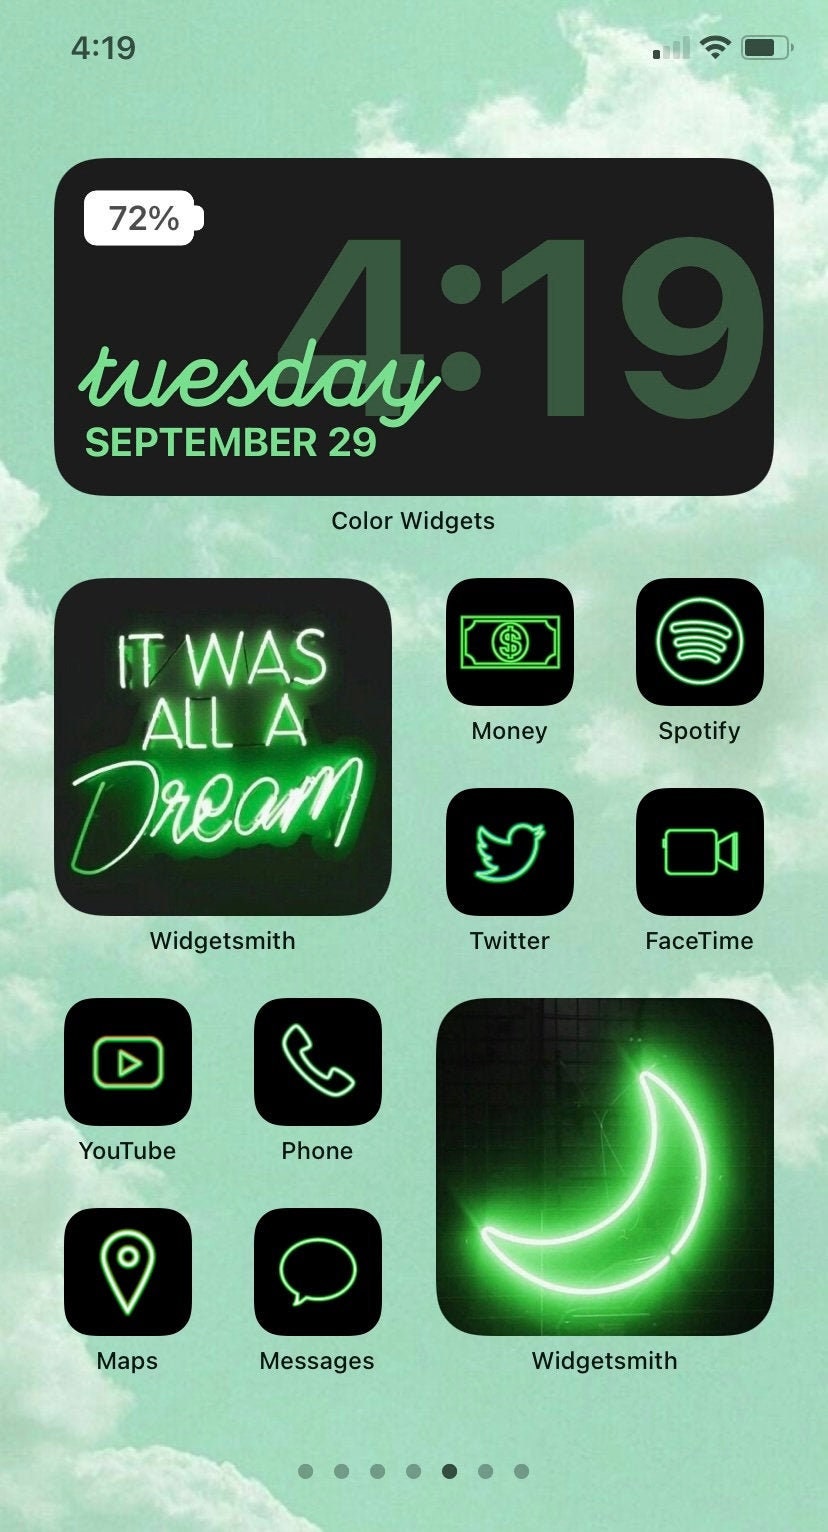 Green Neon App Icons Neon Aesthetic Ios 14 Icons iPhone Icon 